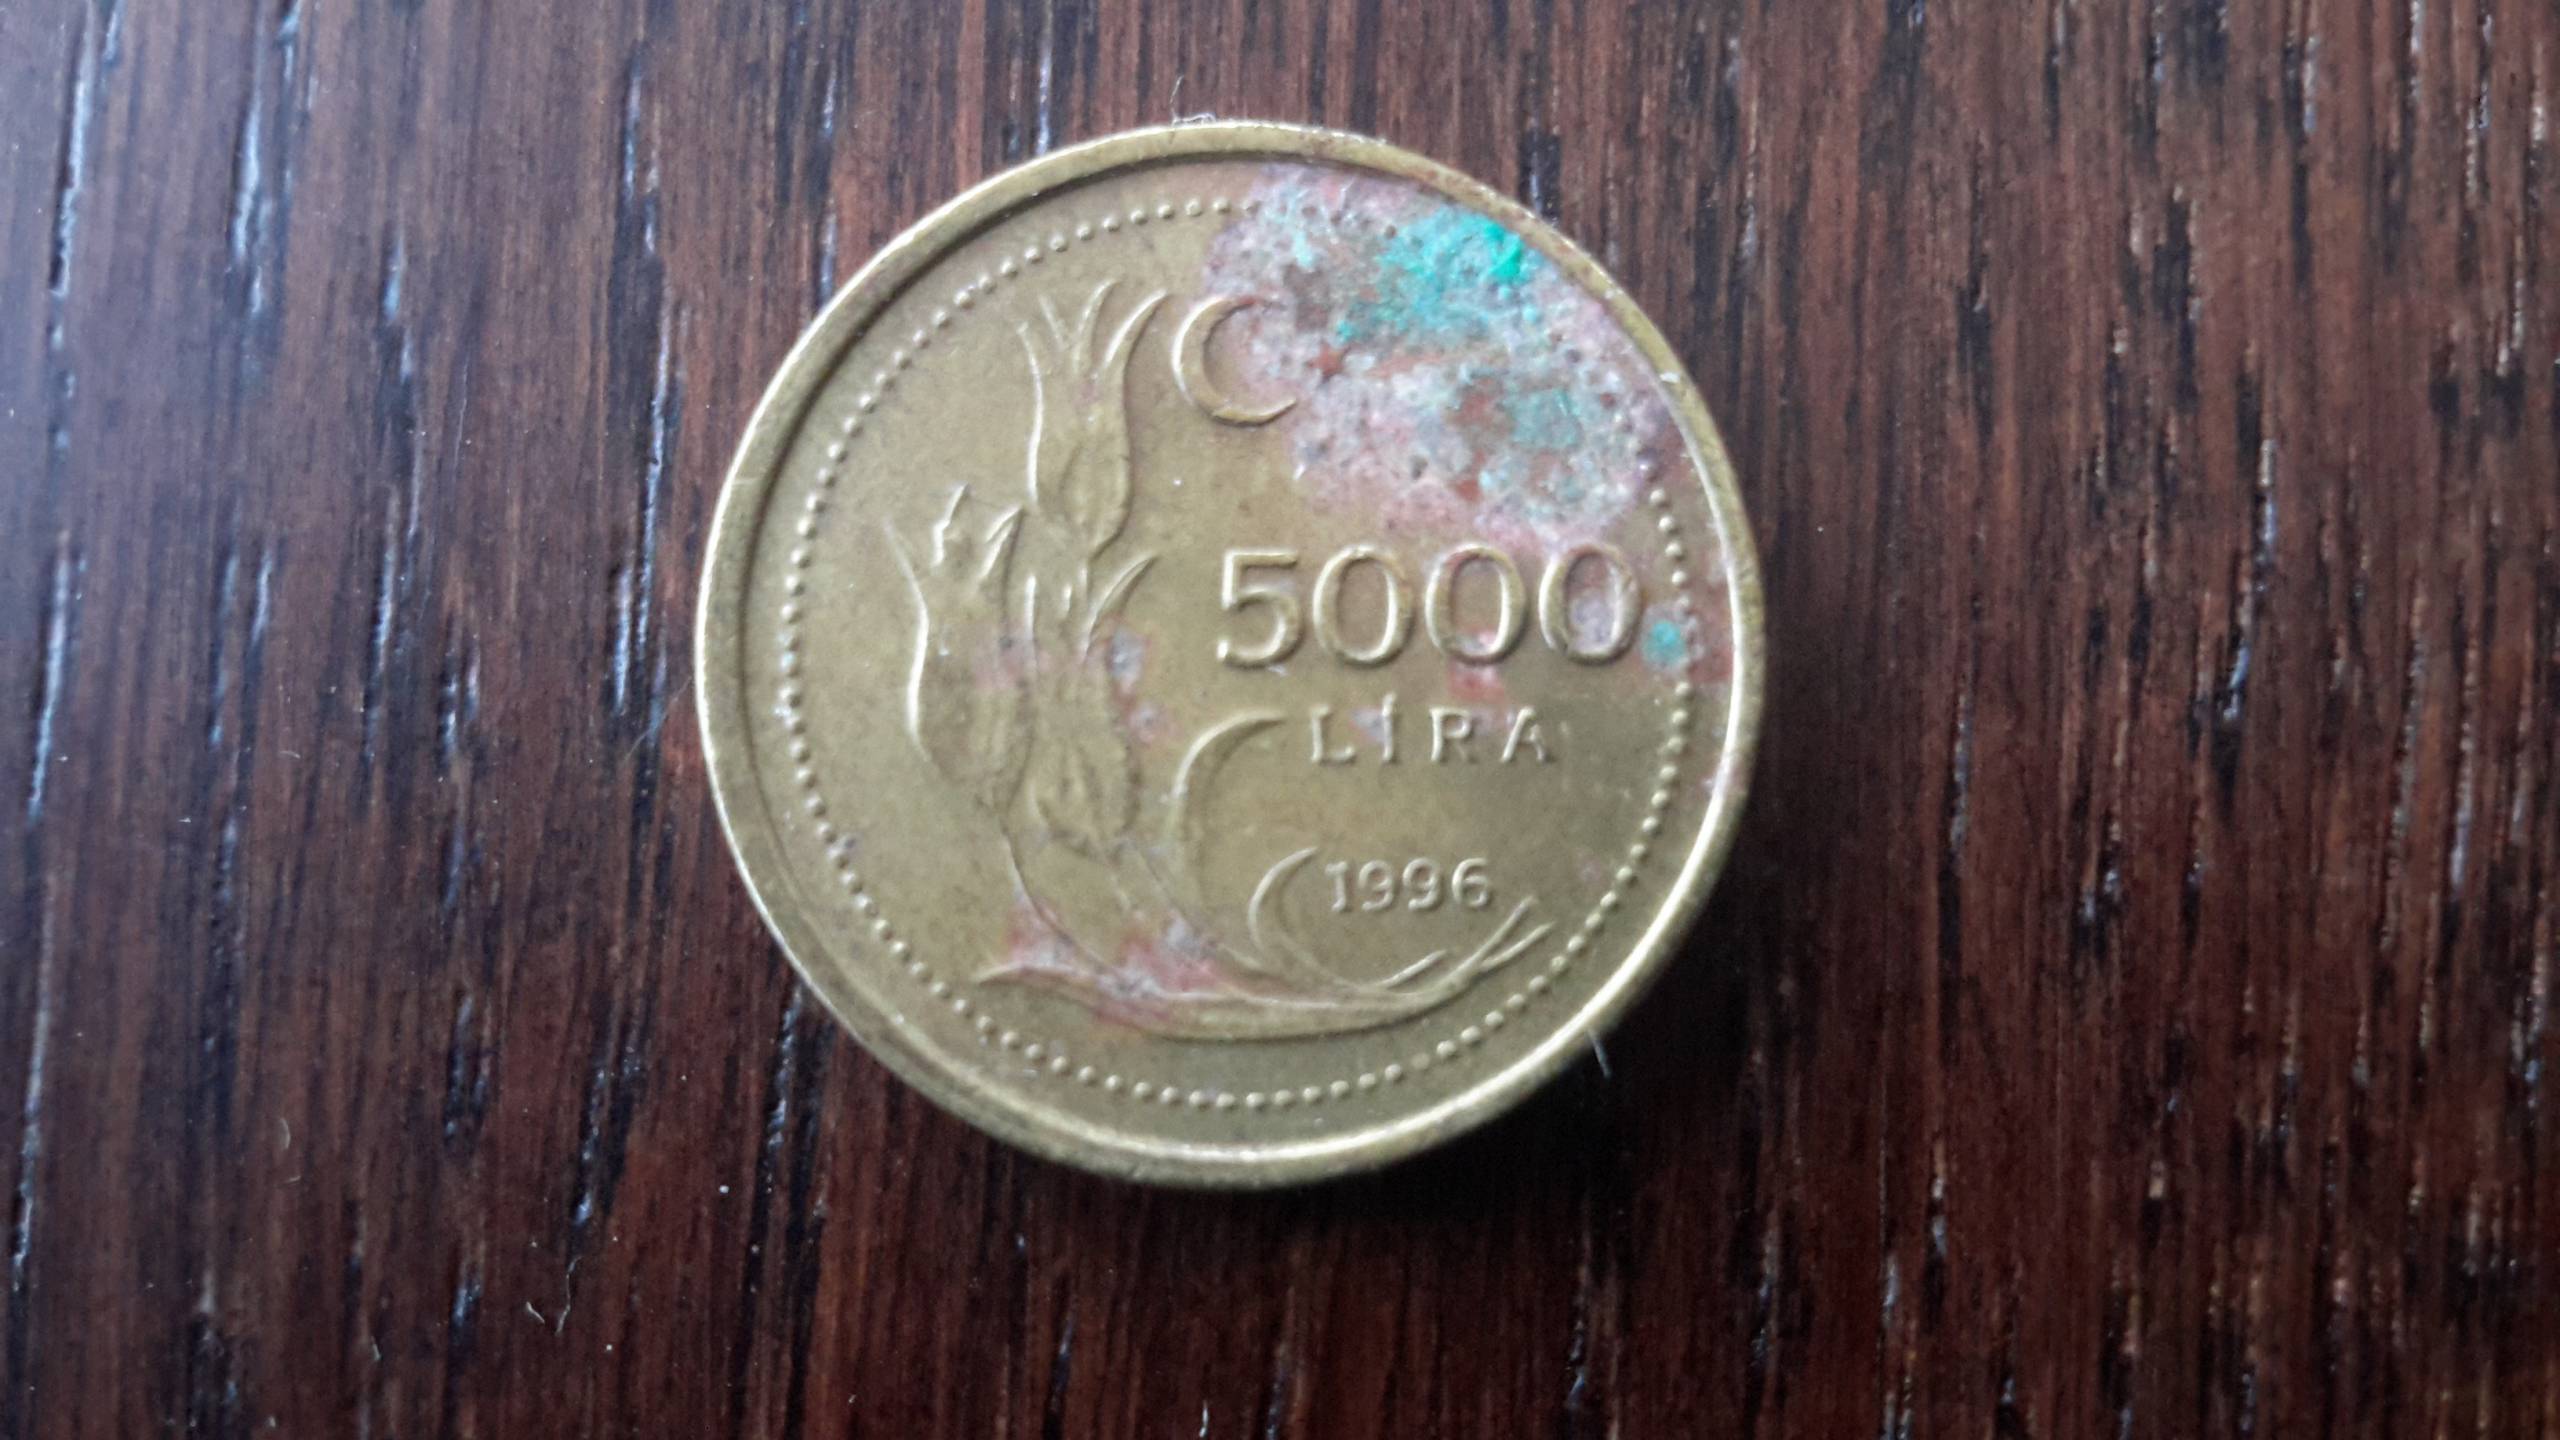 7000 лир в рублях. Монета turkiye Cumhuriyeti c 5000 lira 1996 года.